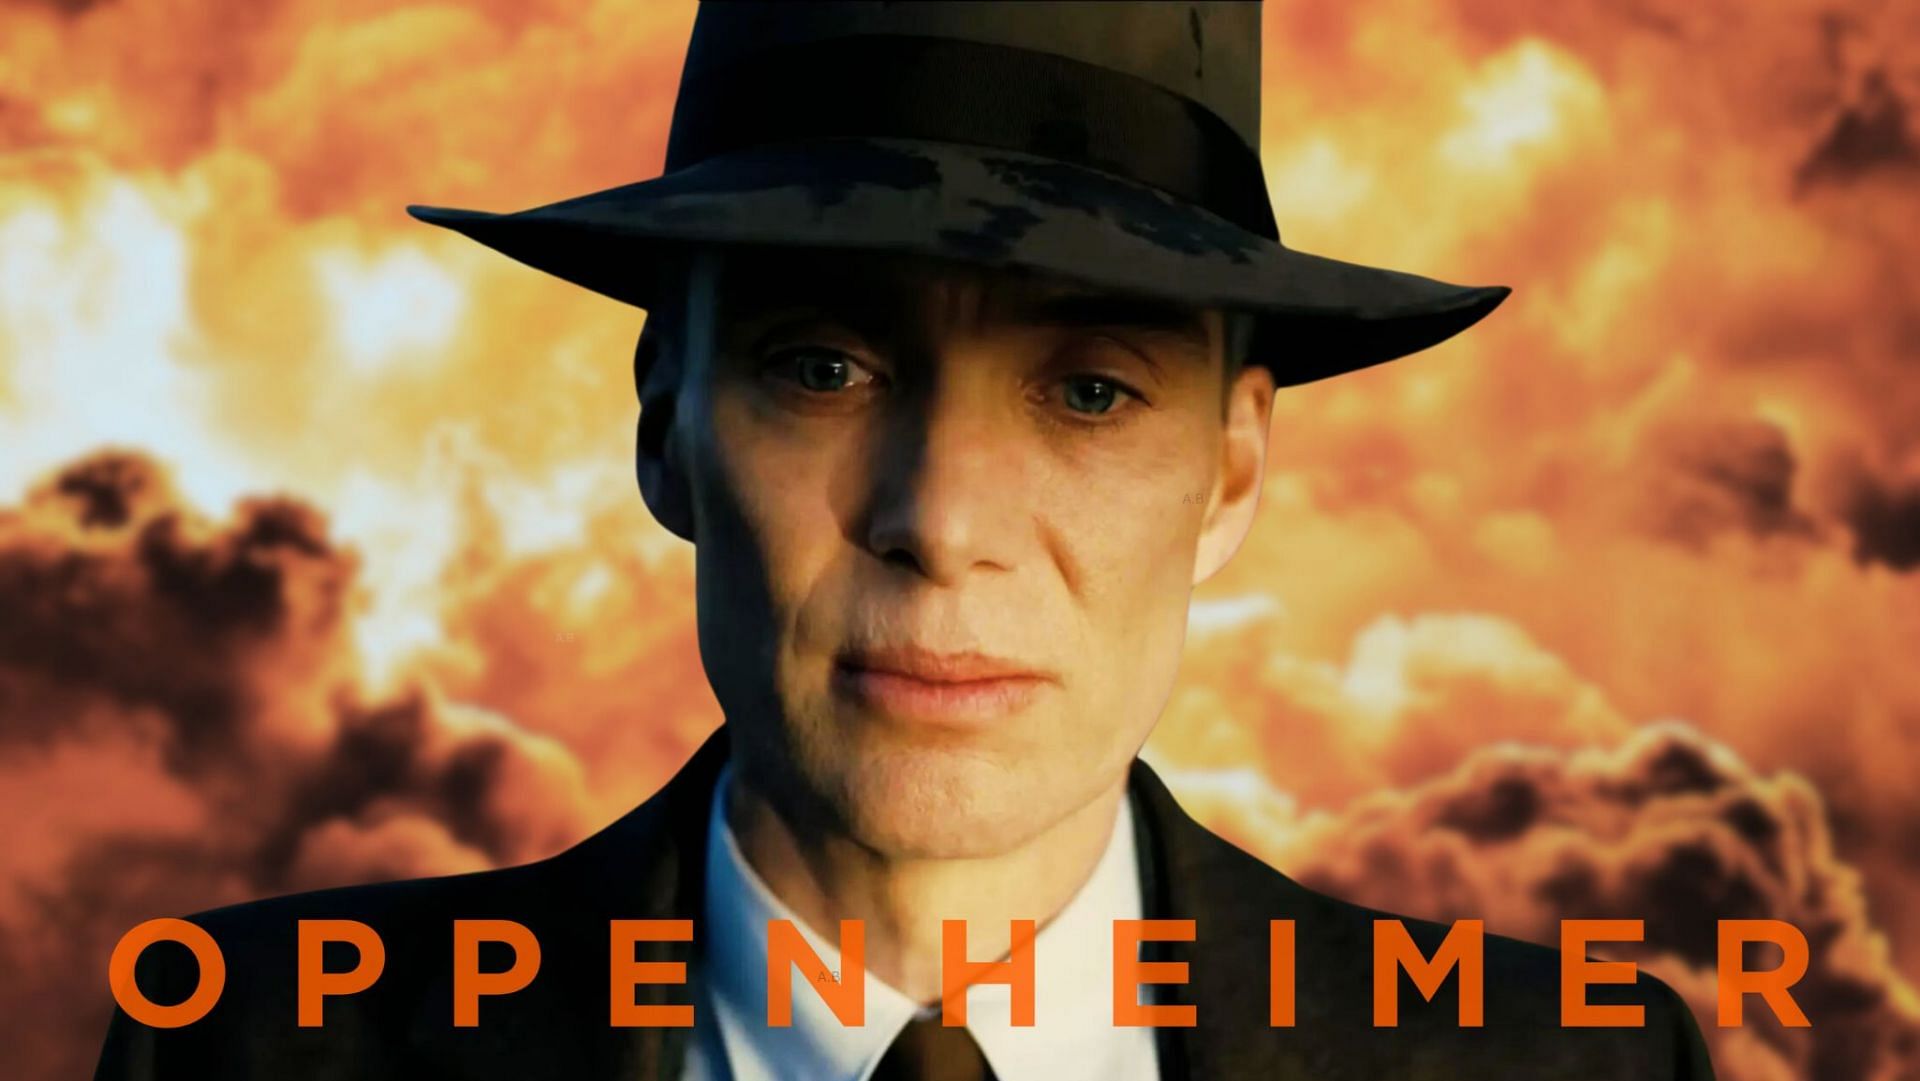 Witness History Unfold in Stunning Clarity - Experience Oppenheimer in IMAX 70MM (Image via Sportskeeda)